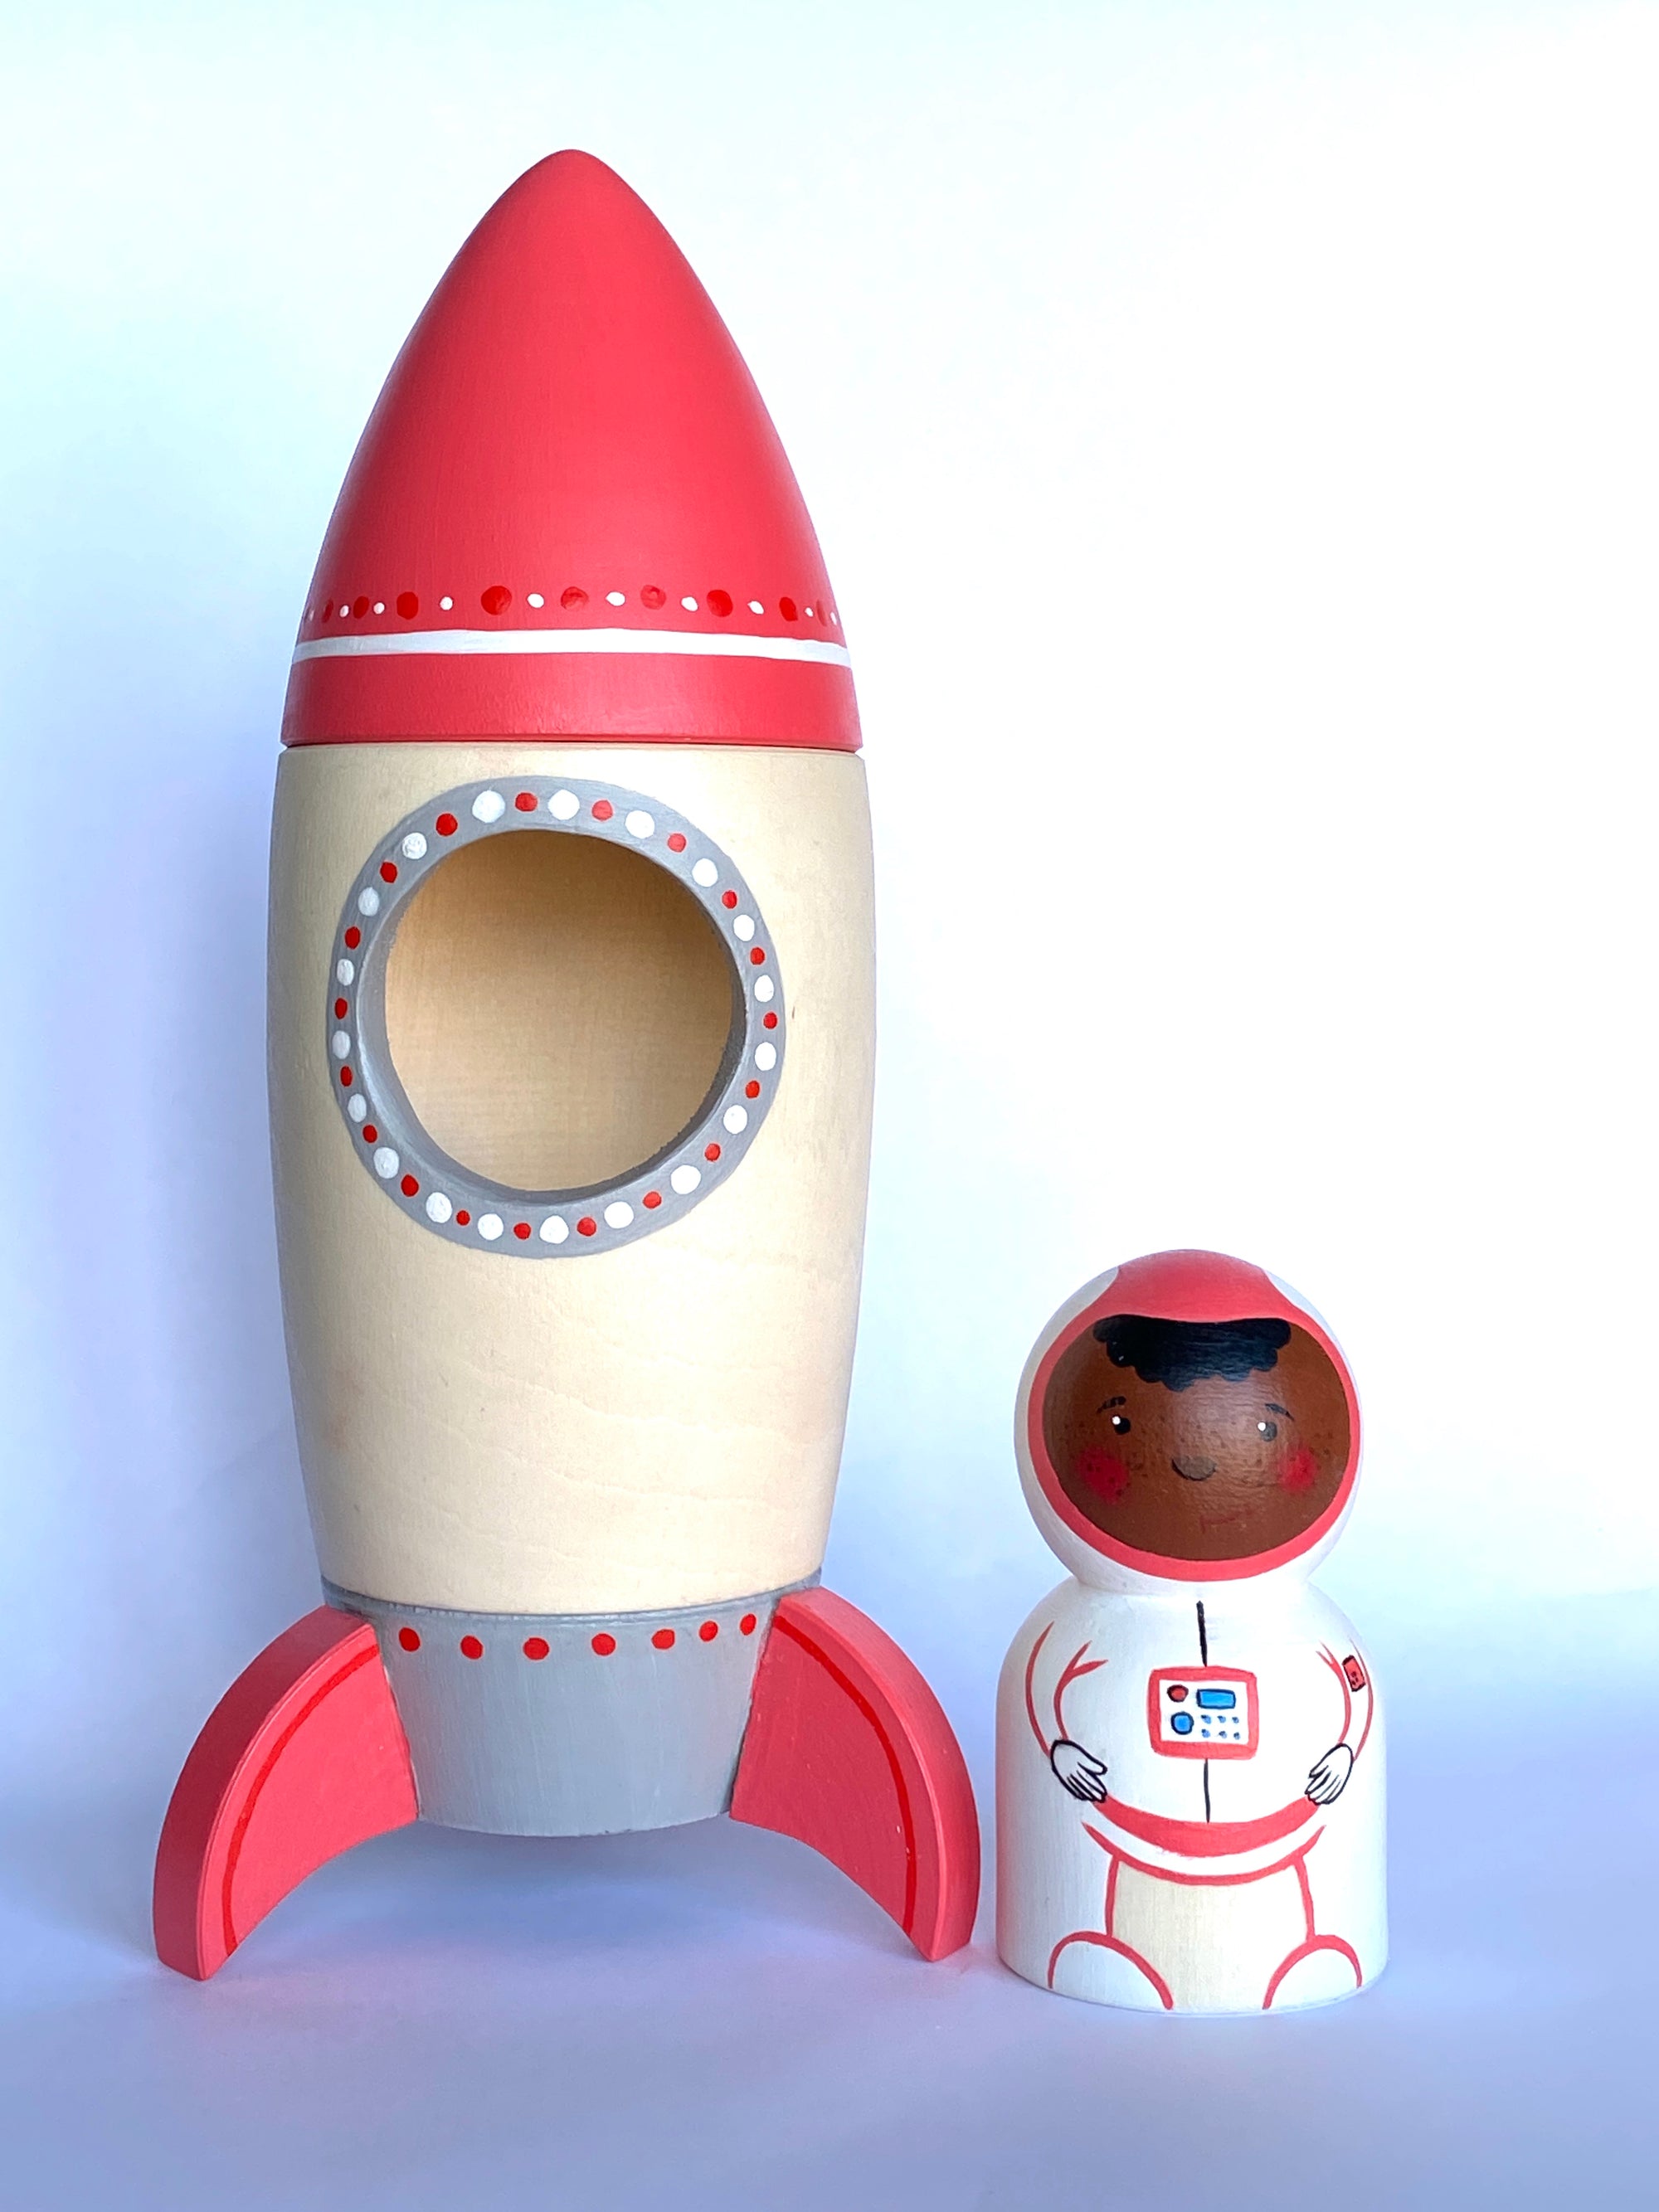 Food Grade Silicone Rocket, Astronaut Pretend Play Baby Toy